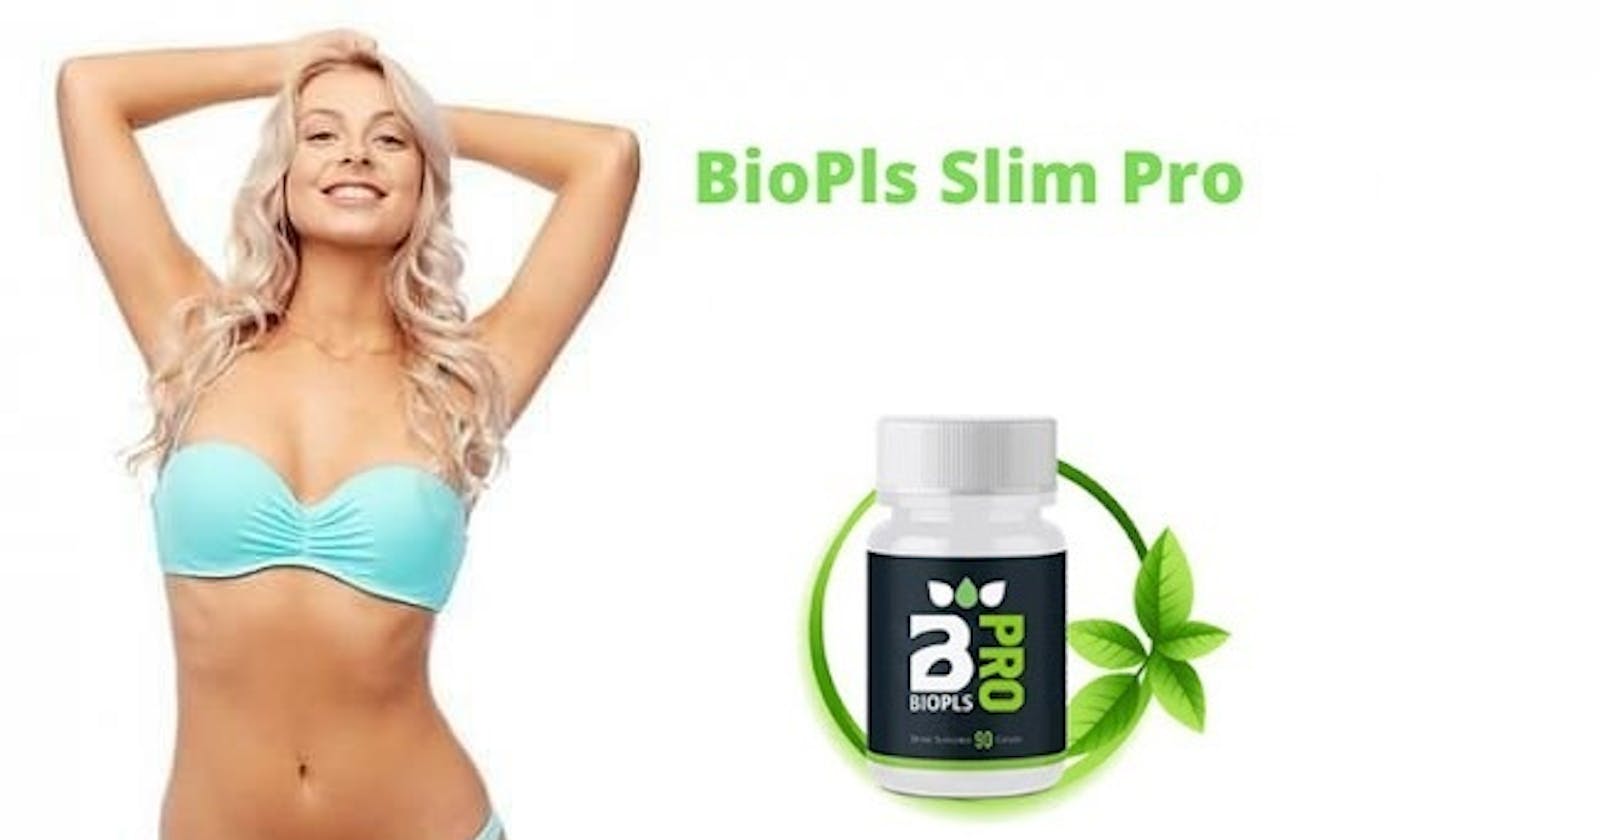 BioPls Slim Pro Reviews (Scam or Legit) - Does BioPls Slim Pro Really Work?